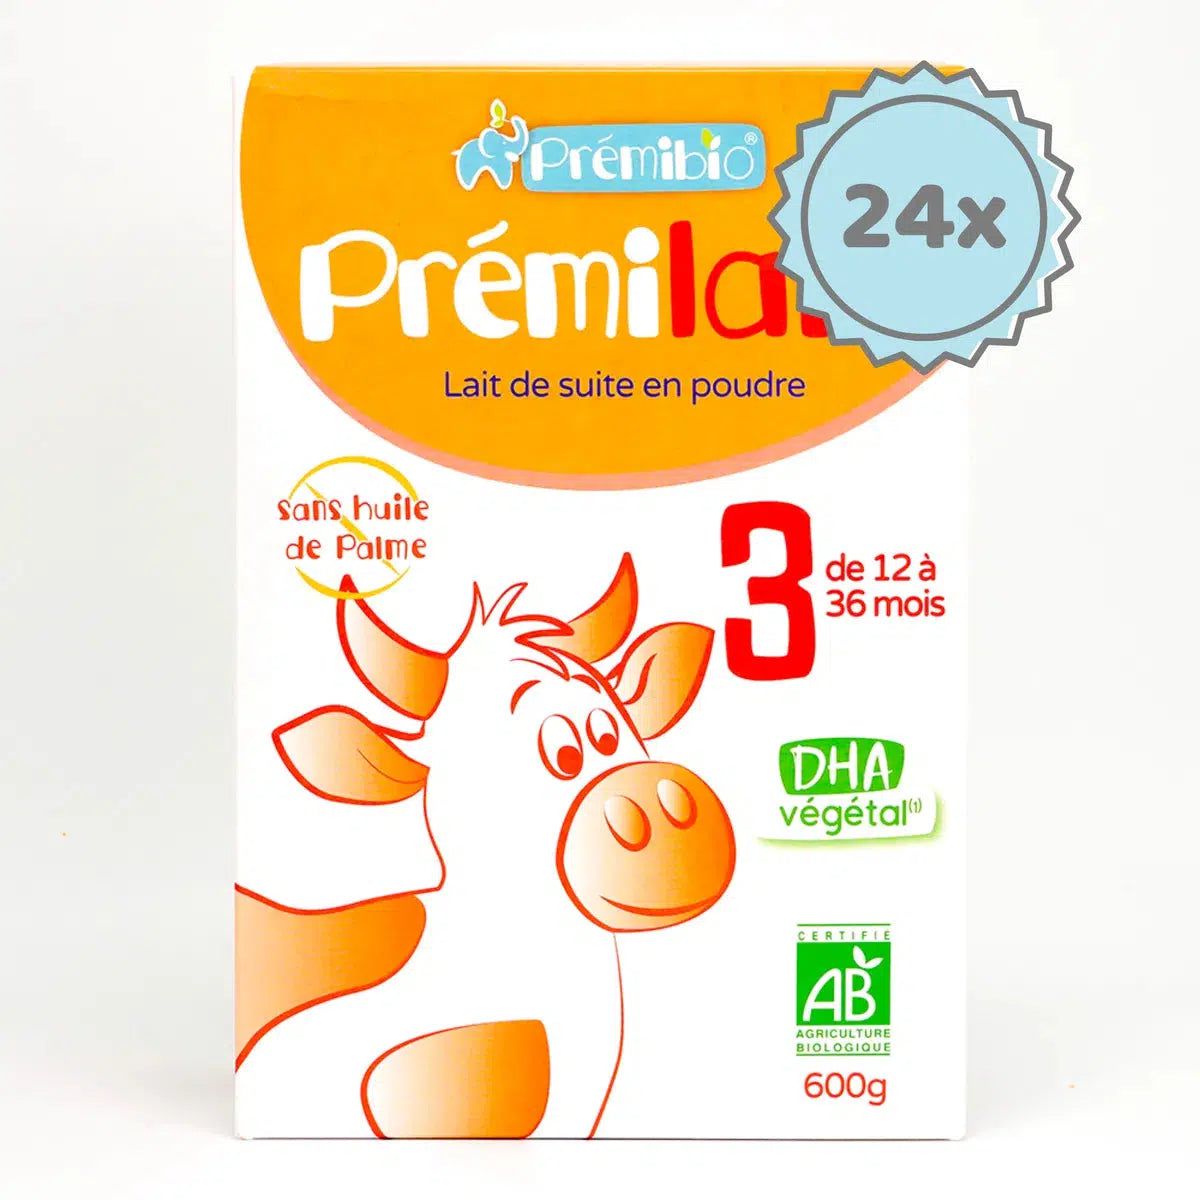 Premibio Organic Premilait Toddler Cow Formula- Stage 3 (12 to 36 months) - (600g) - 24 Boxes